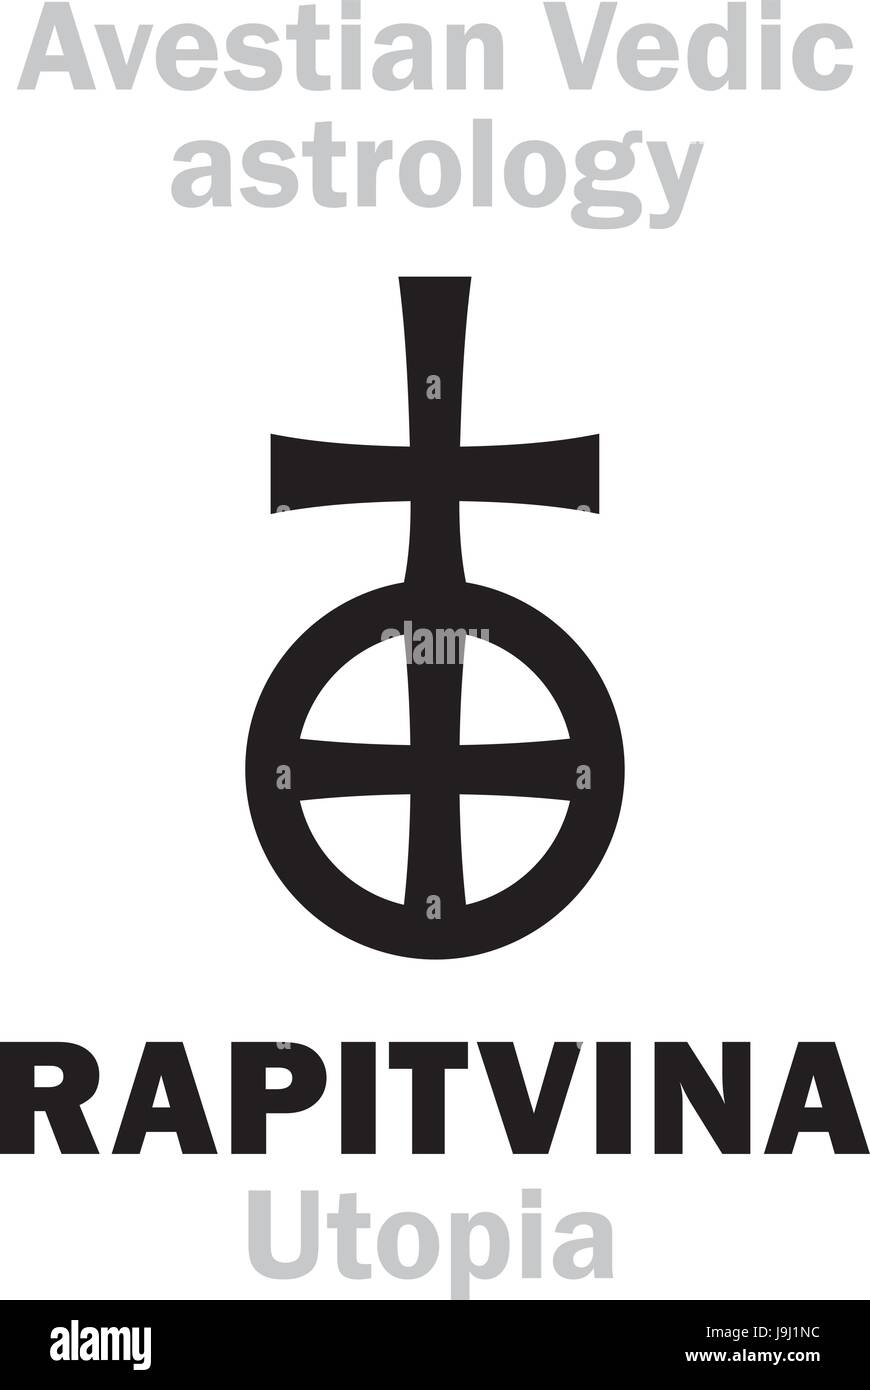 Astrology Alphabet: RAPITVINA (Utopia), Avestian vedic astral faraway tellurian planet. Hieroglyphics character sign (single symbol). Stock Vector